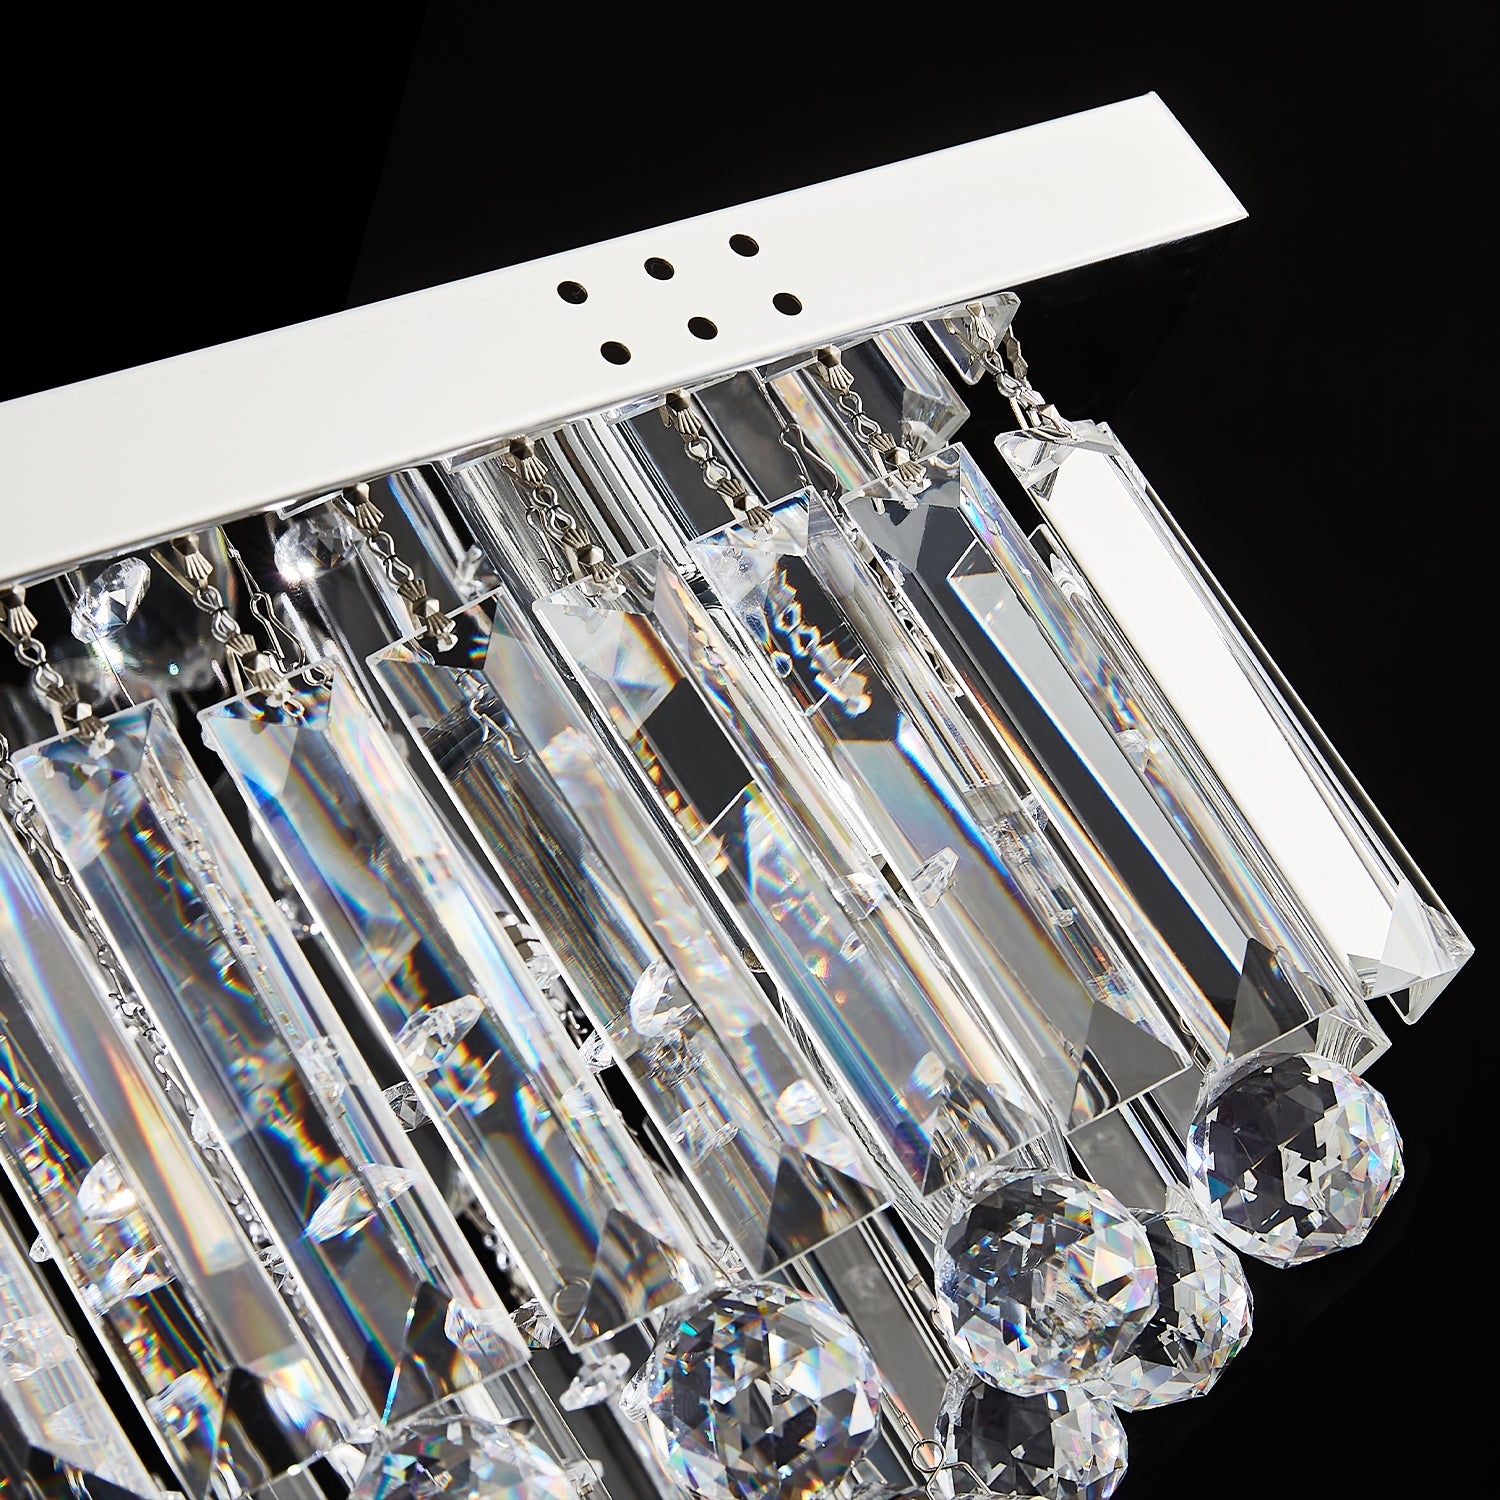 Square Rain Drop Crystal Ceiling Light - Contemporary Lighting Fixture 